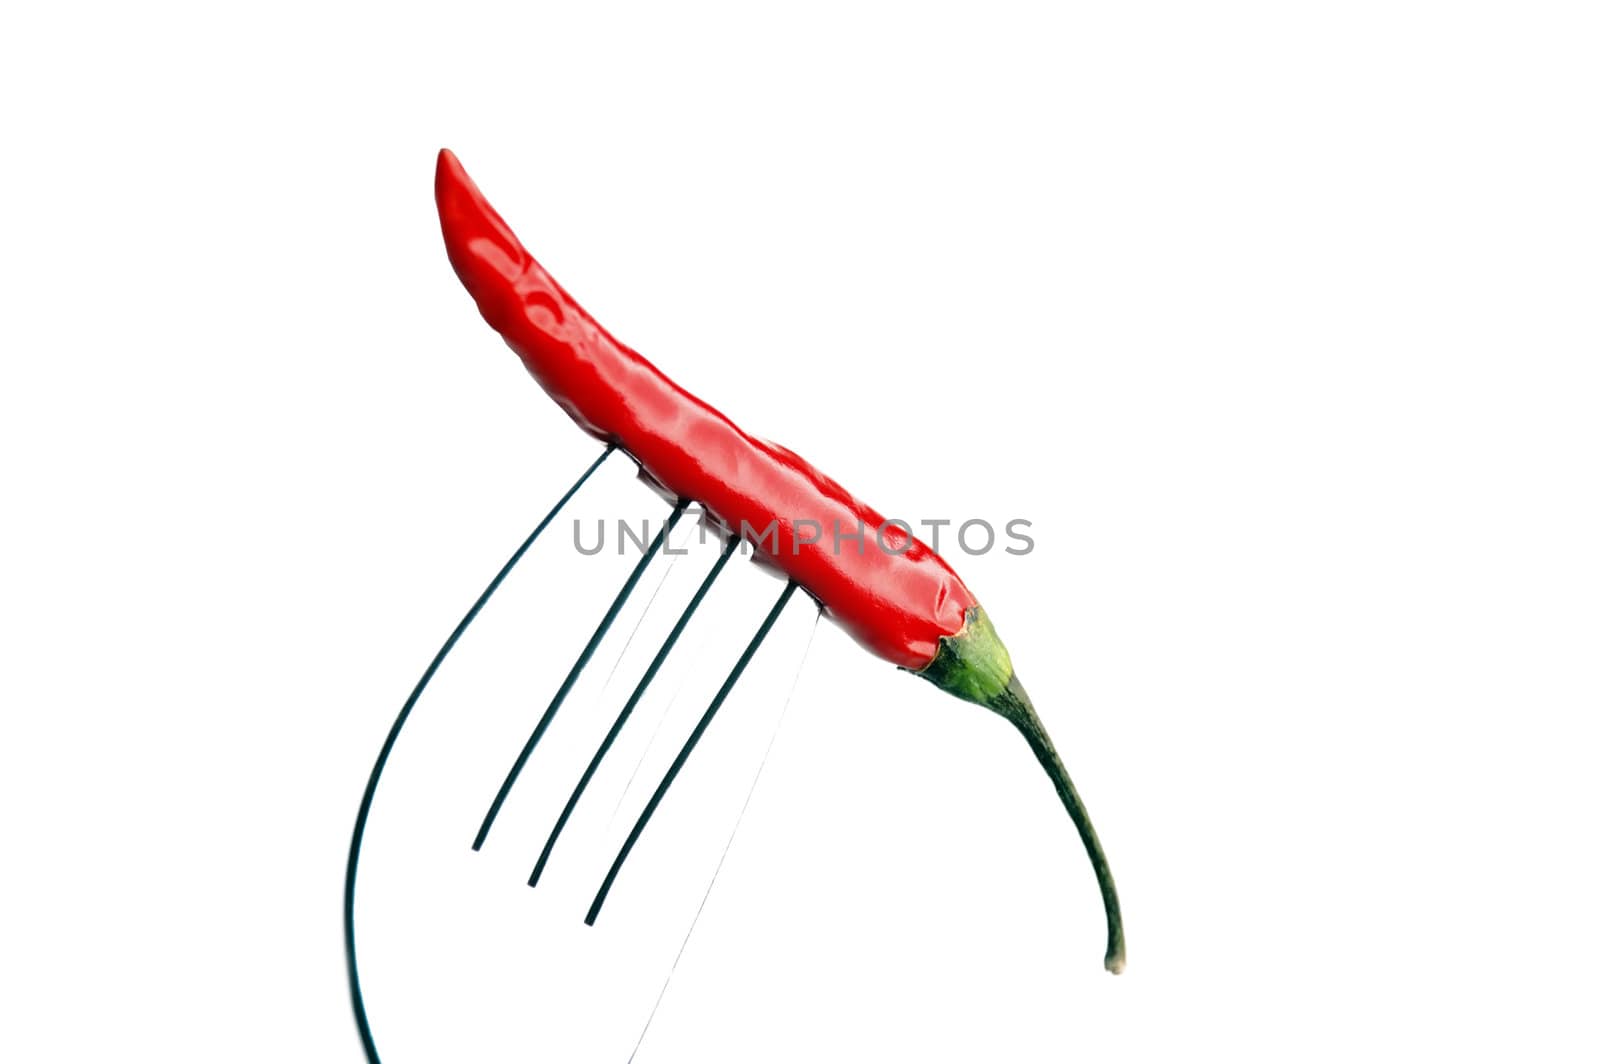 red chili pepper on a fork by keko64